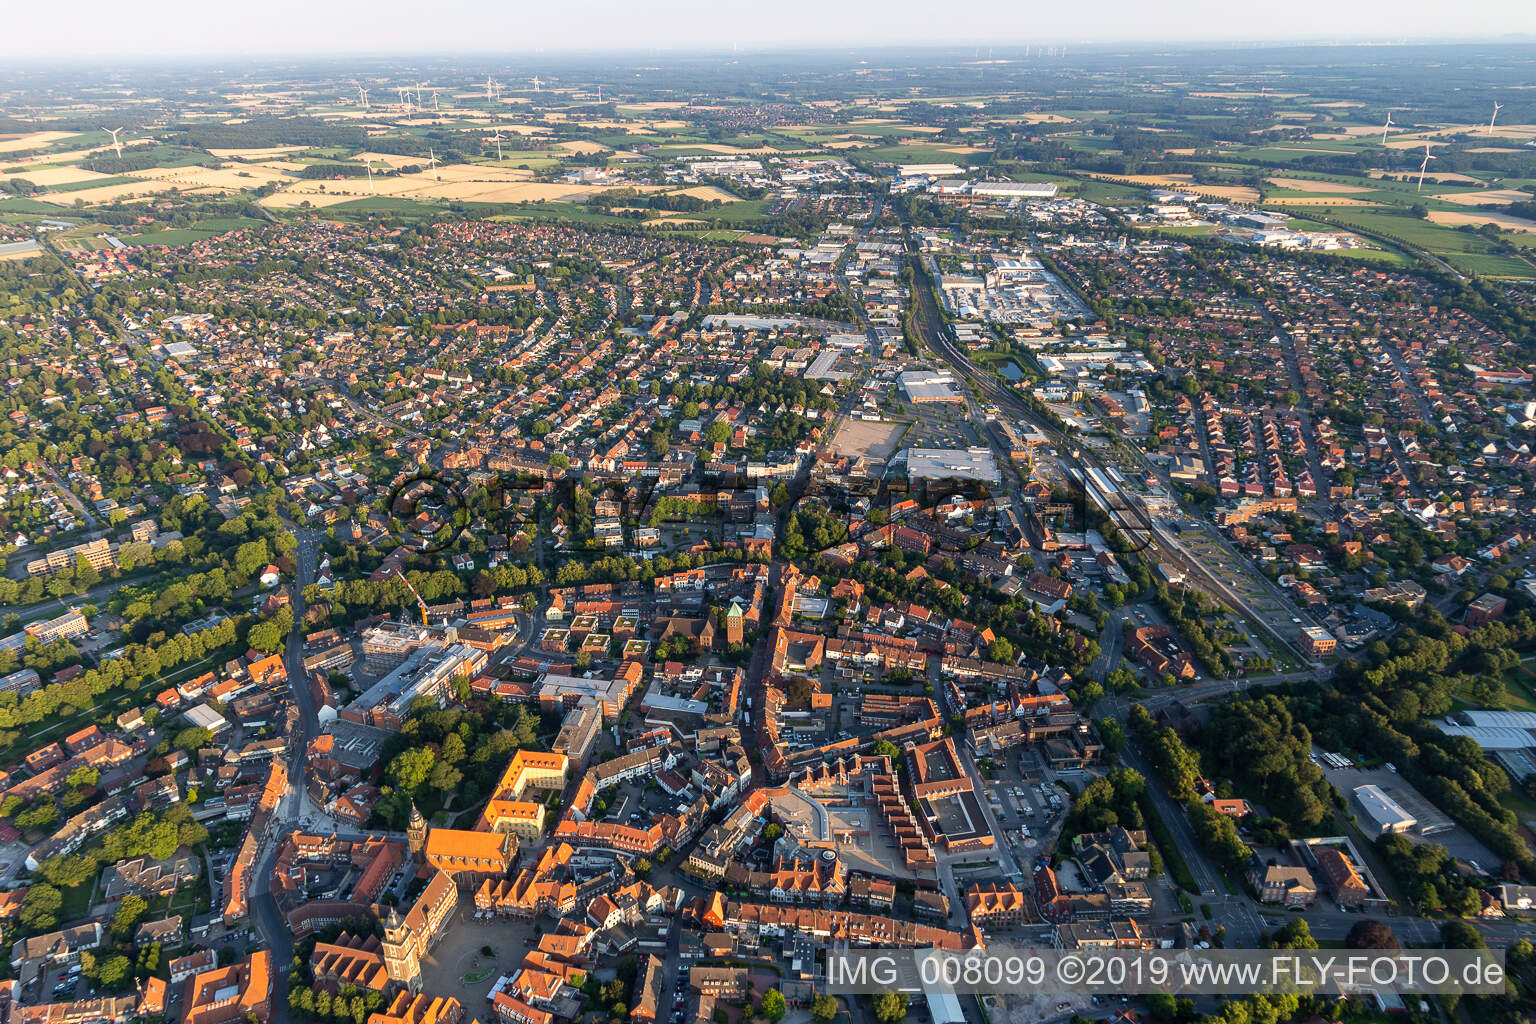 Coesfeld in the state North Rhine-Westphalia, Germany seen from above